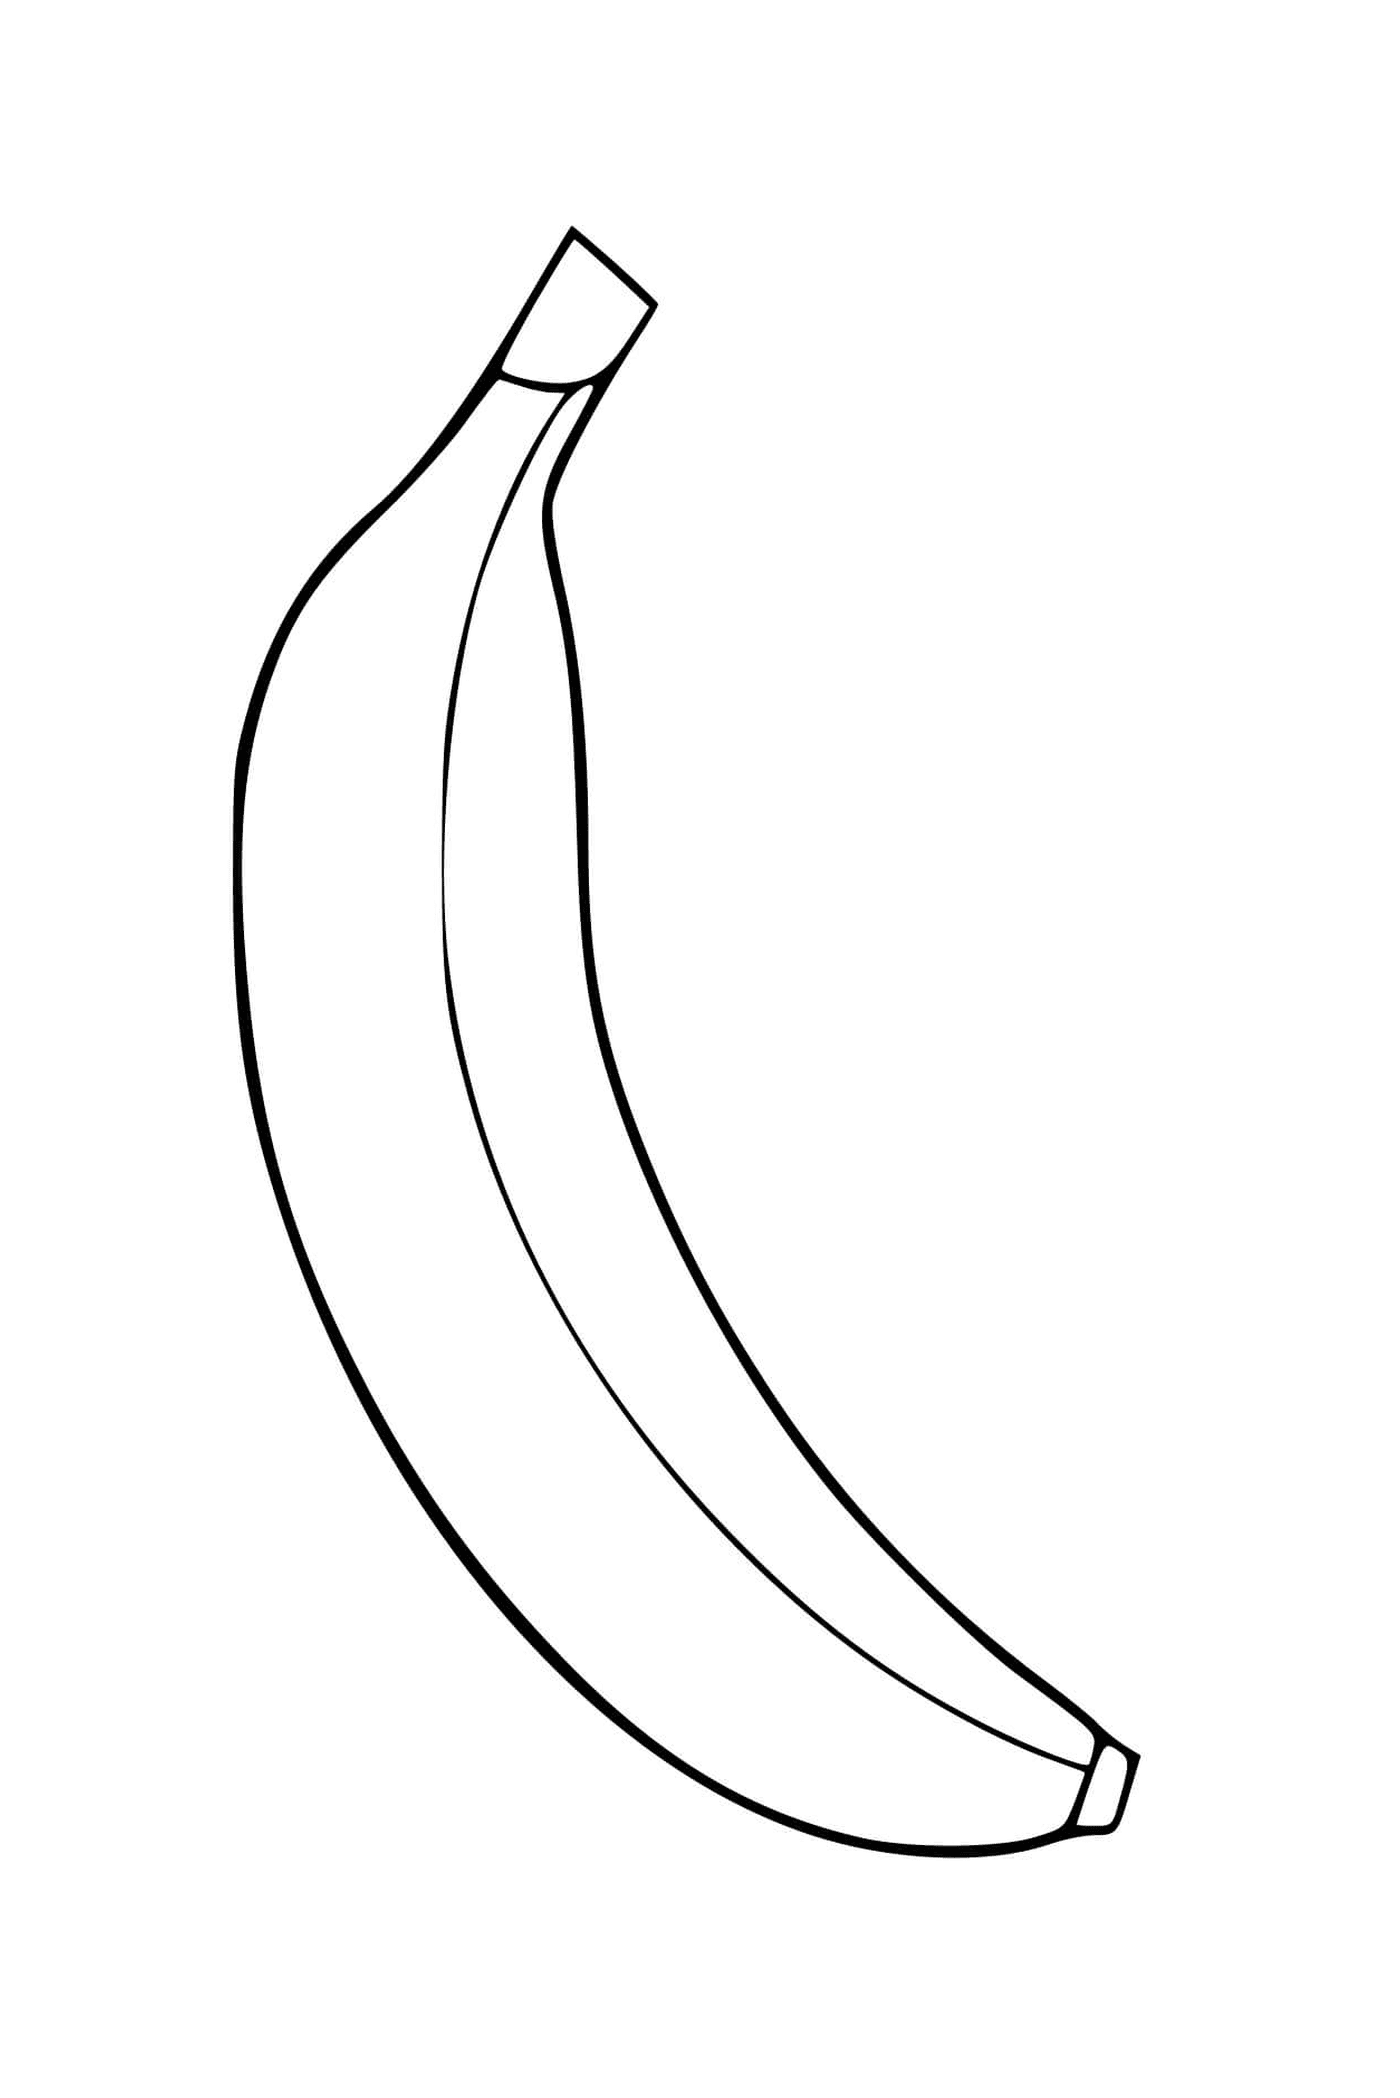  Uma banana 